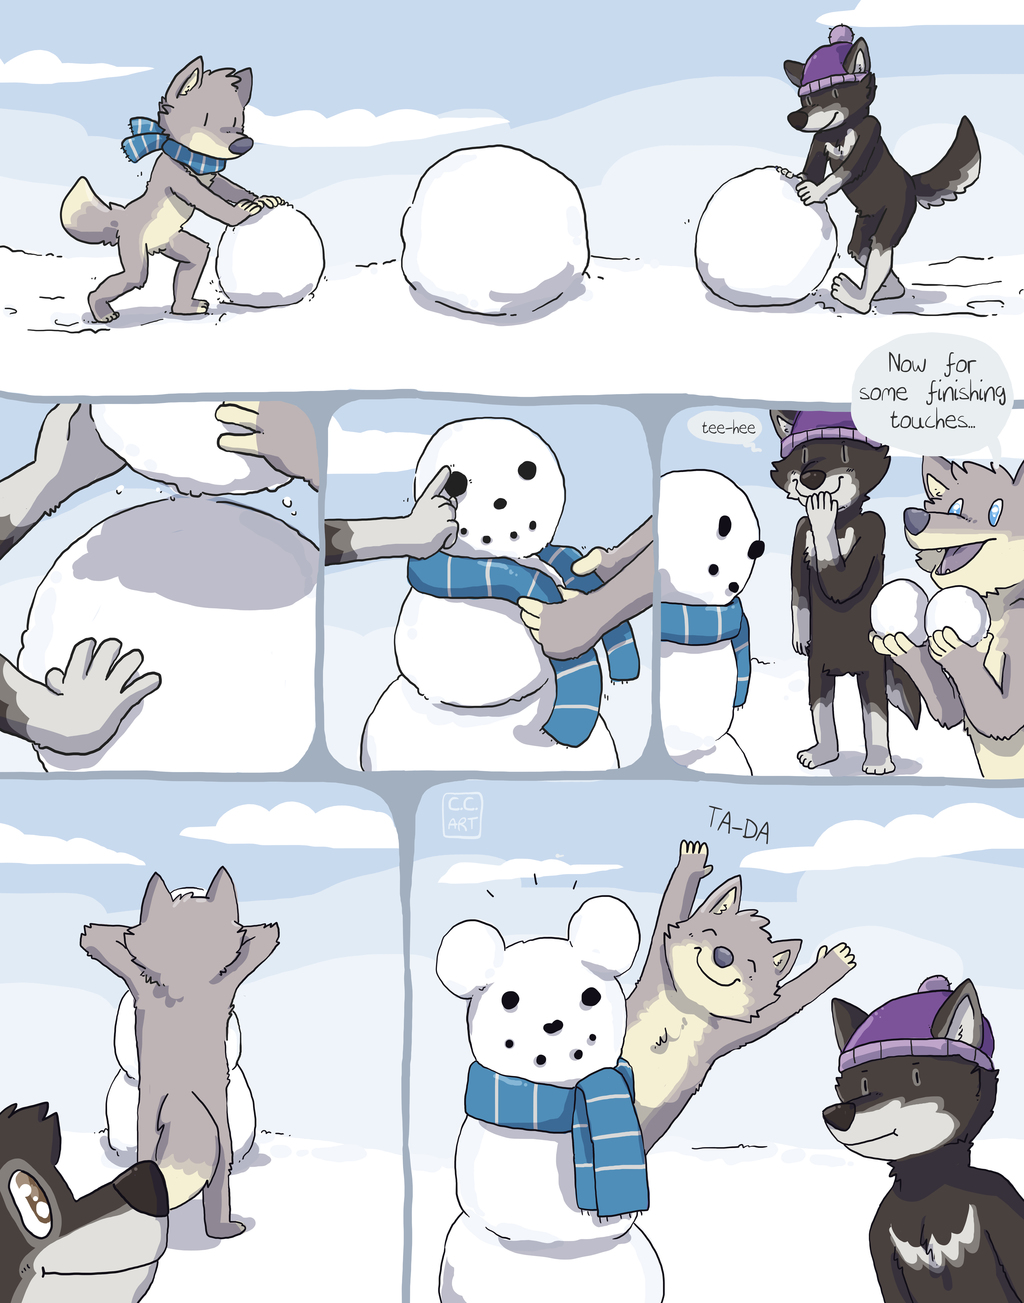 Misleading Snowballs [comic]